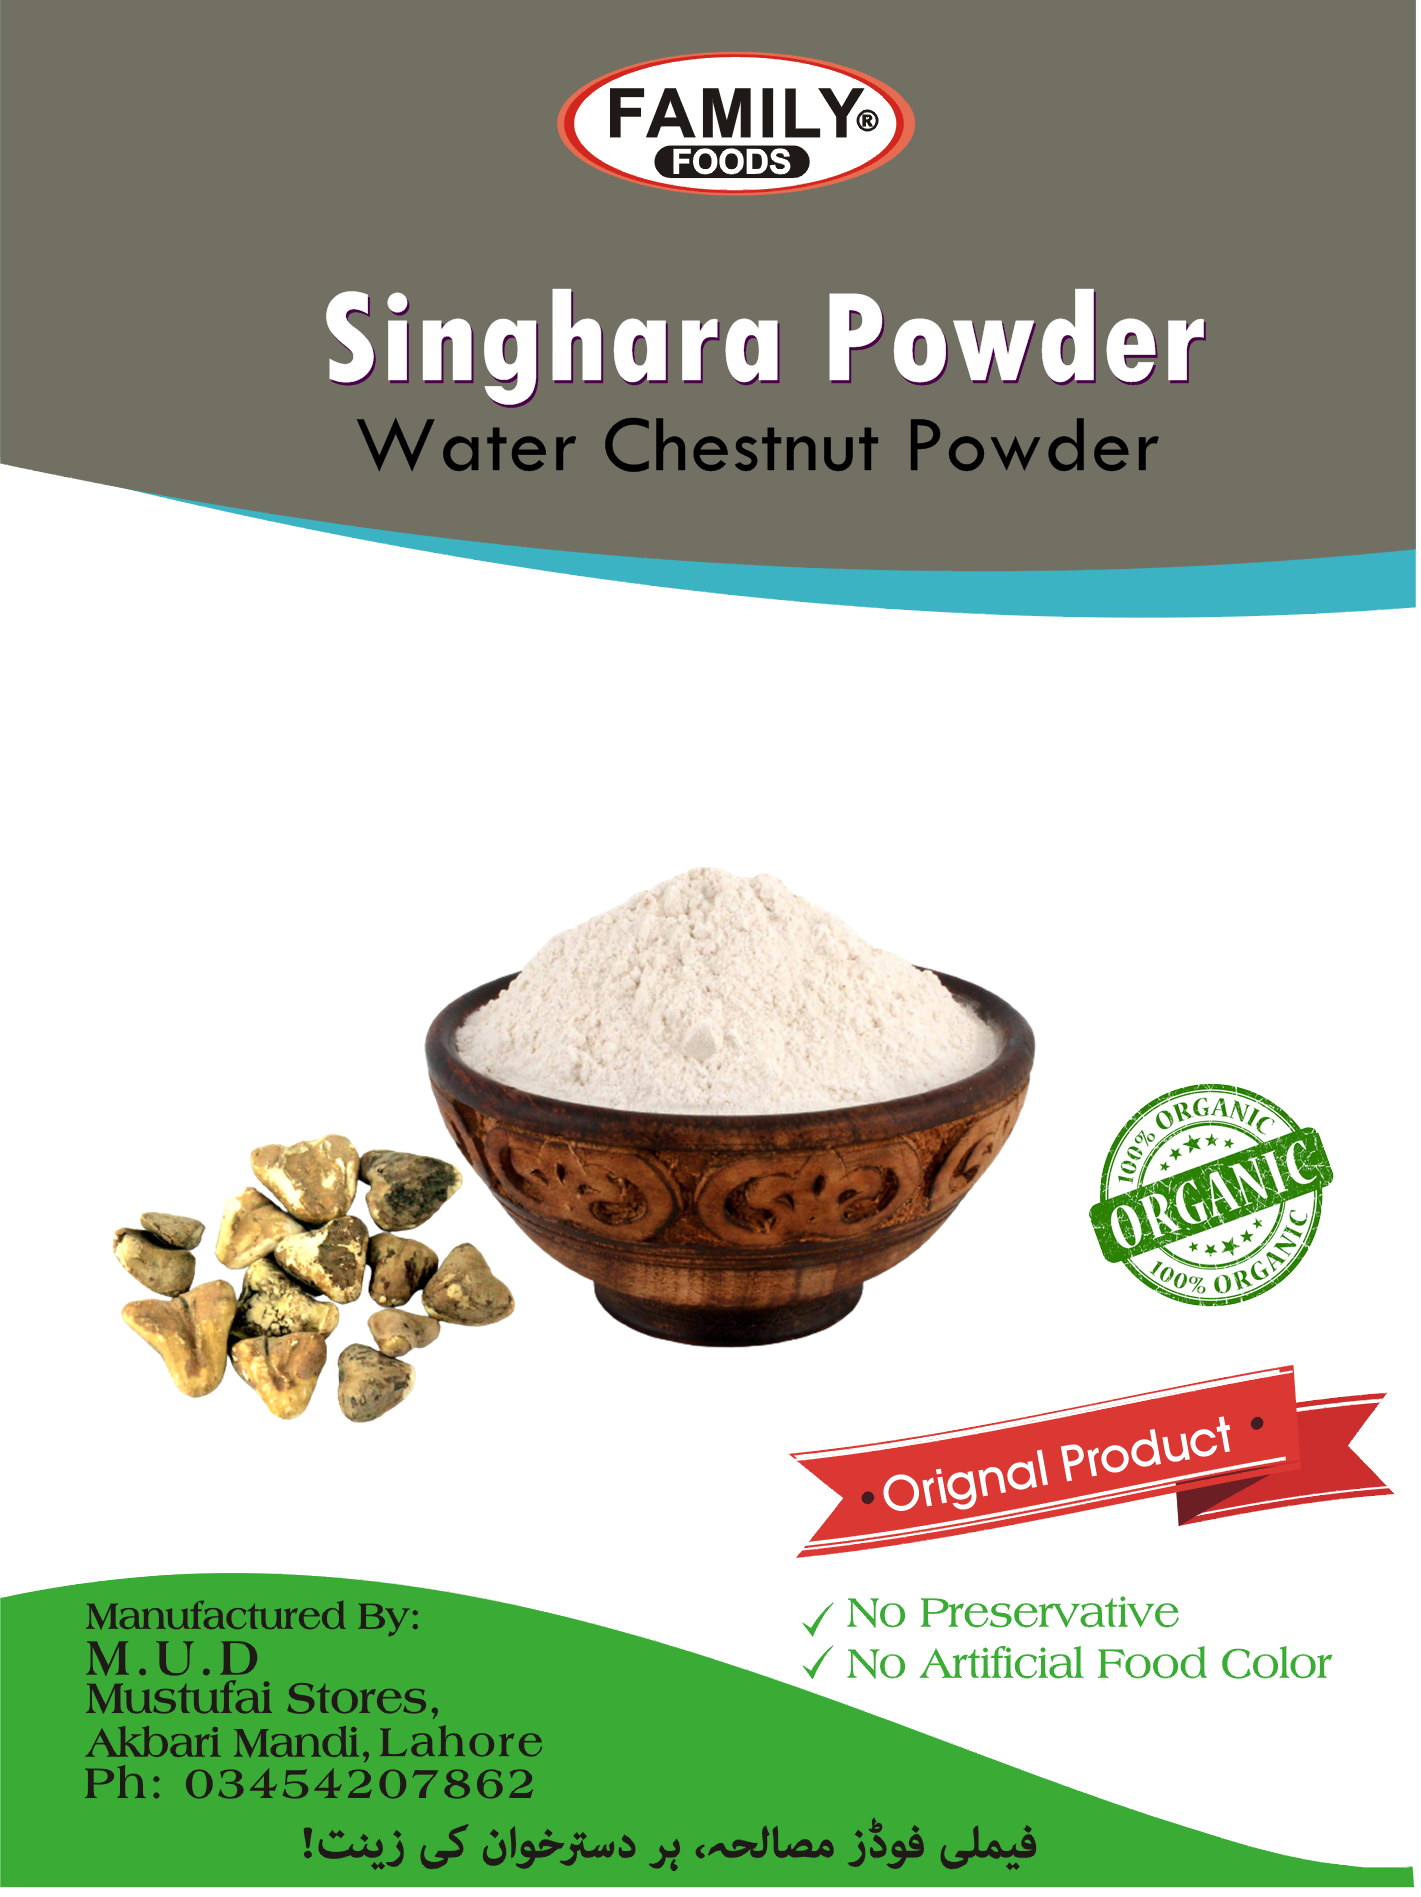 Singhara Powder - Water Chestnut Powder